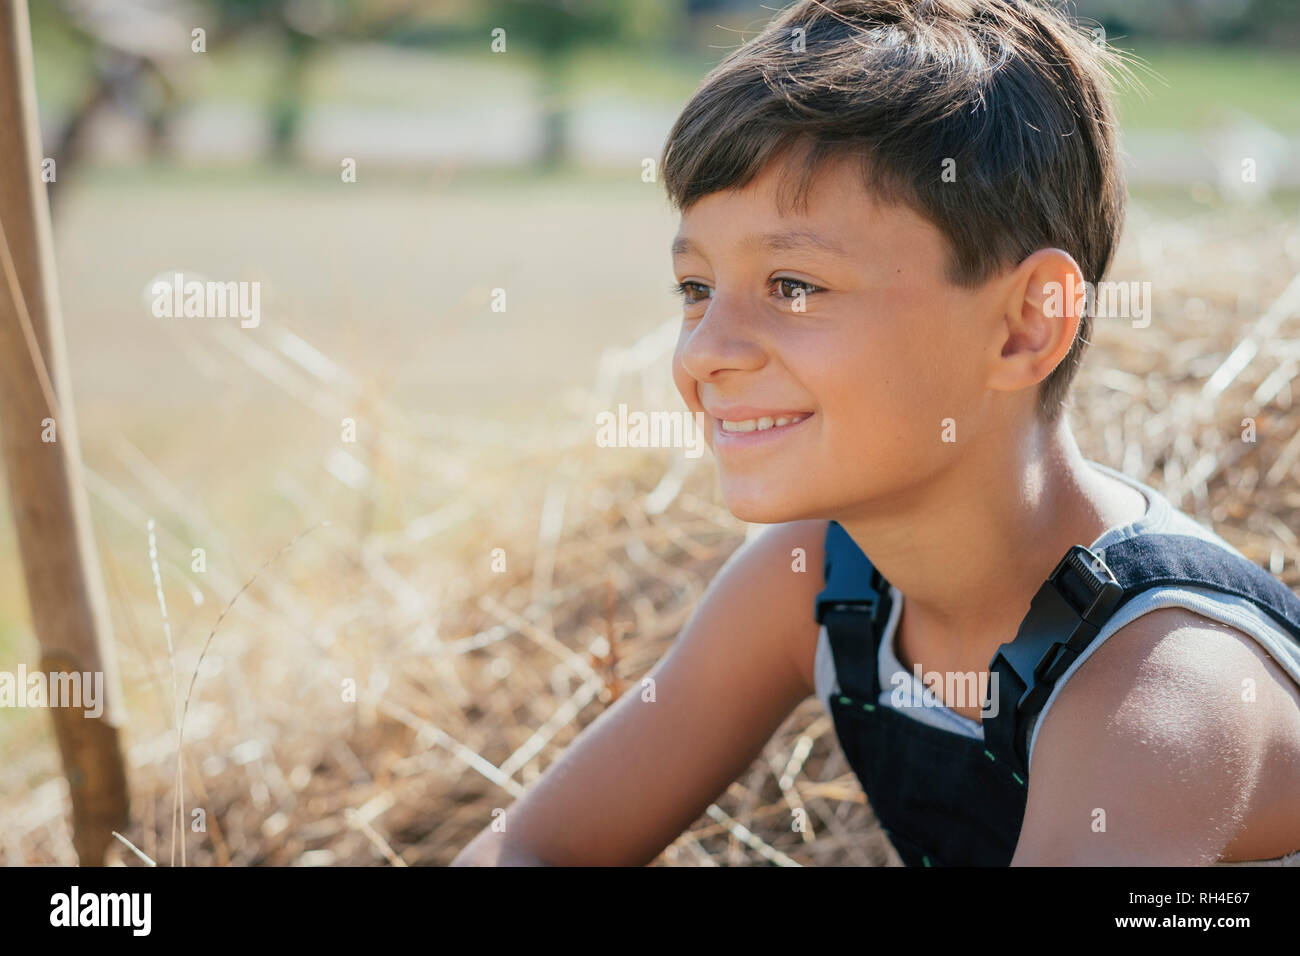 Smiling boy sitting in hay Stock Photo